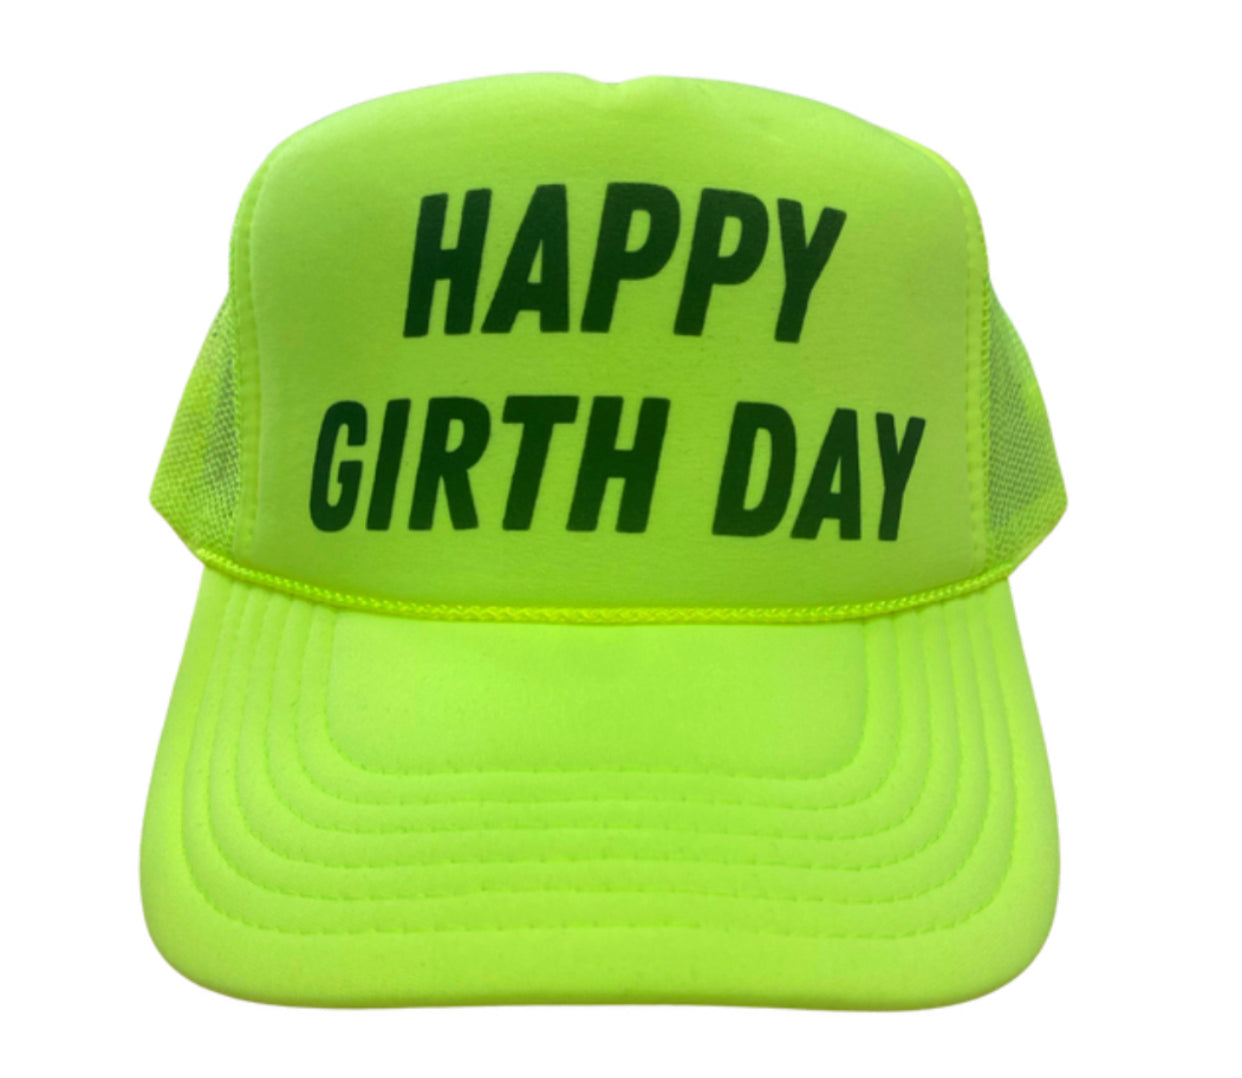 Happy Girth Day Trucker Hat